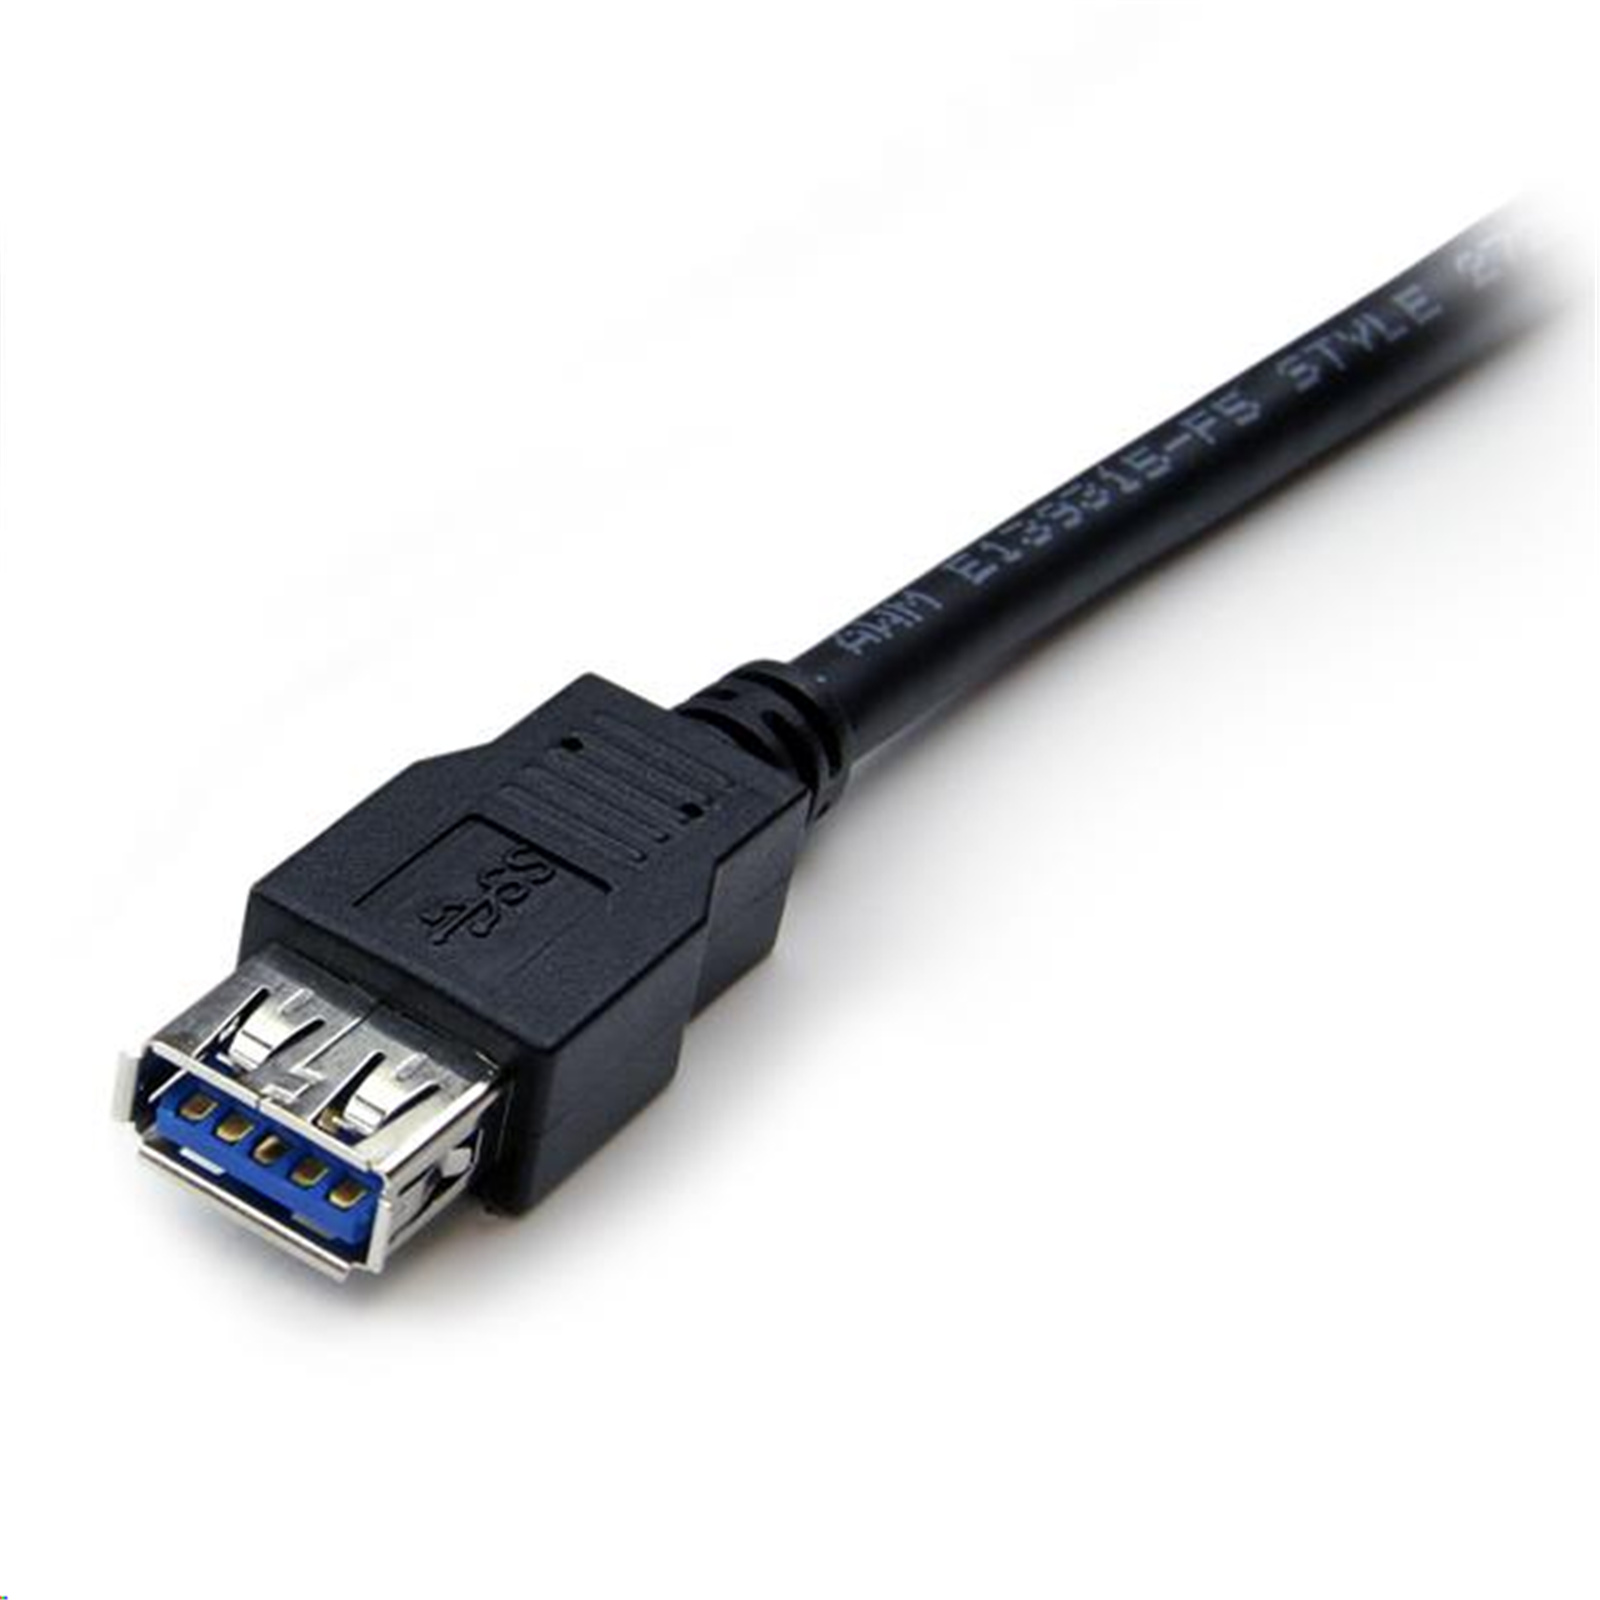 Usb 3.0 кабель питанием. USB 3.2 Gen 1 Type a кабель. Разъем USB 3.0 male. Кабель USB 3.0 SUPERSPEED USB 3.0 19 Pin. Шнуры USB 3.0 female.